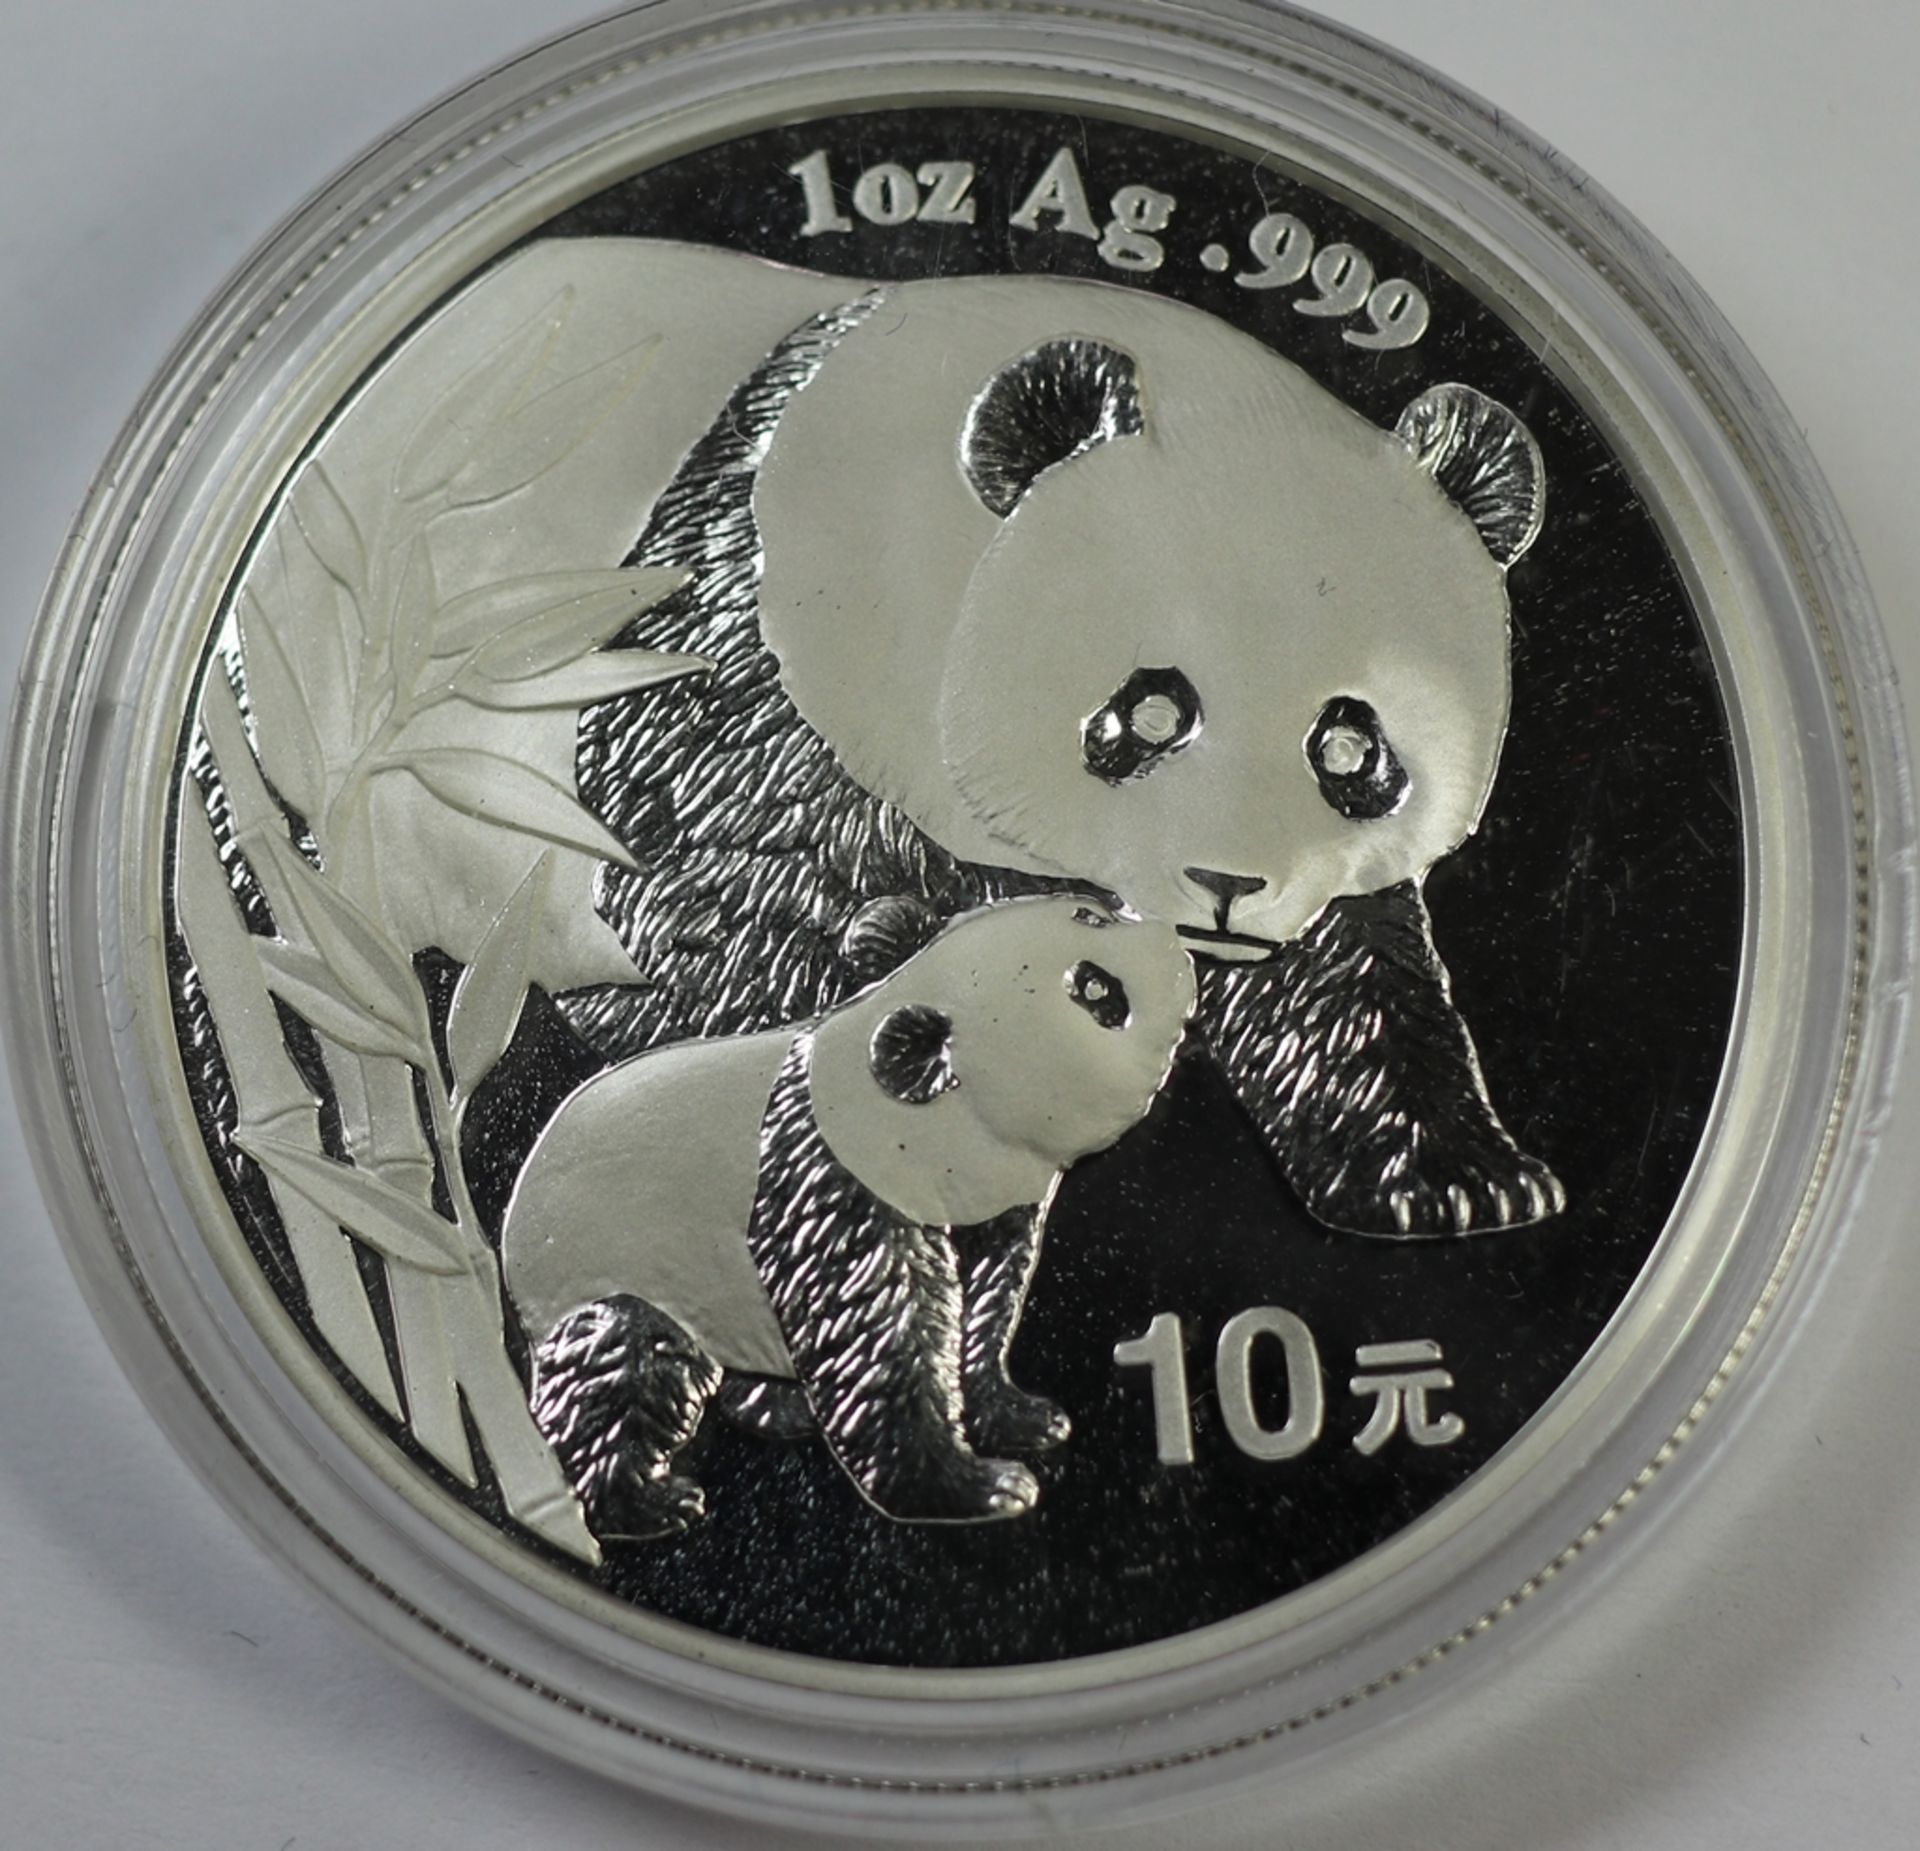 10 Yuan, China Panda in Kapsel 1oz, 2004